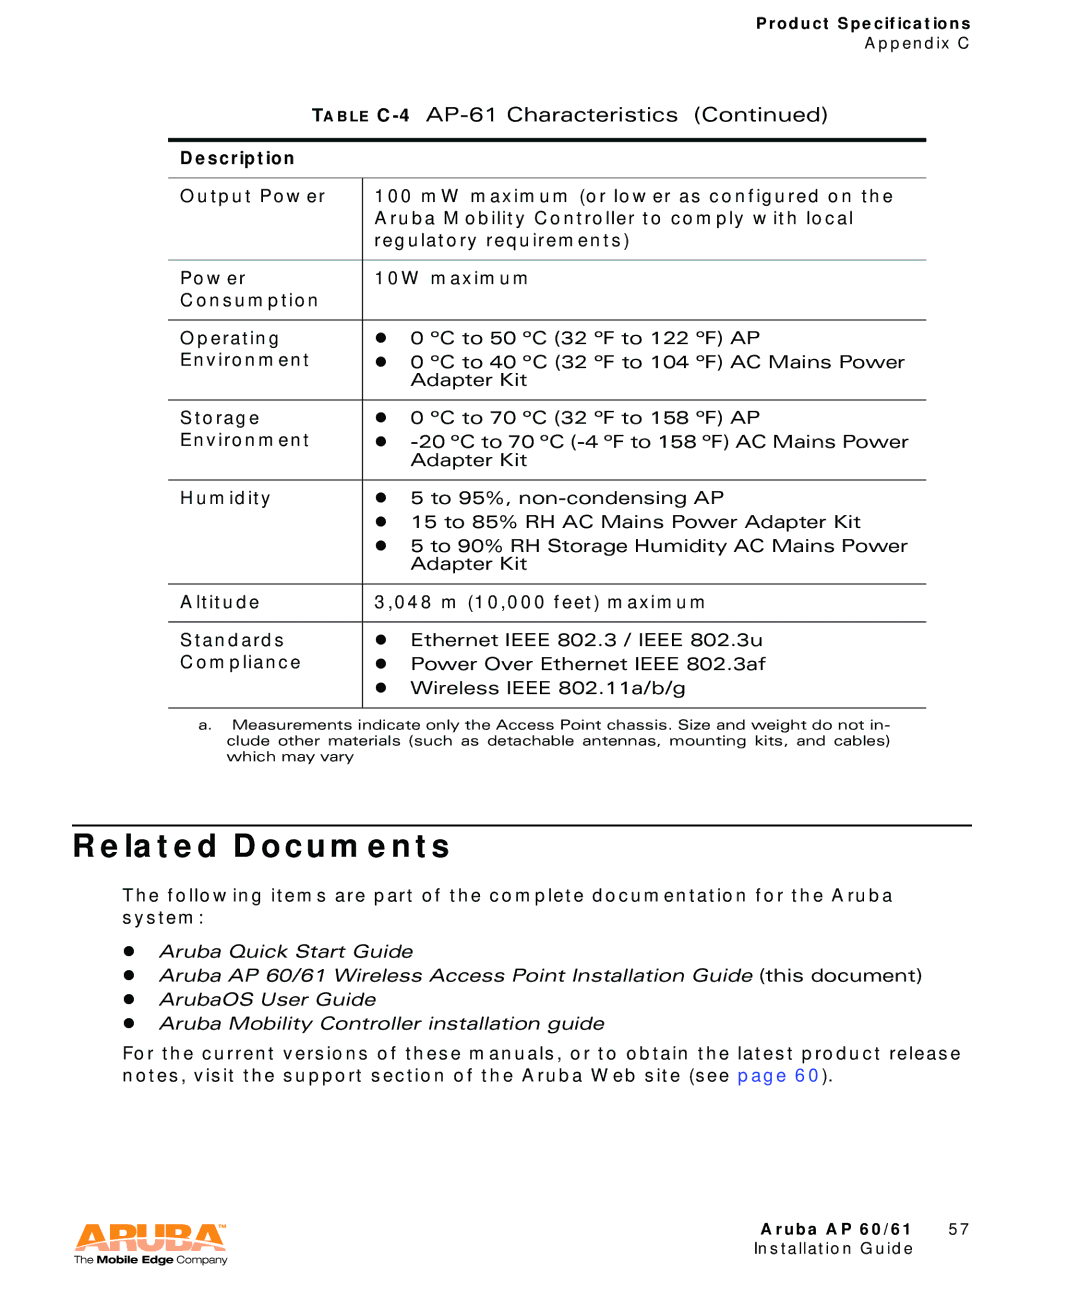 Aruba Networks Aruba AP 60/61 manual Related Documents, Table C-4AP-61 Characteristics 